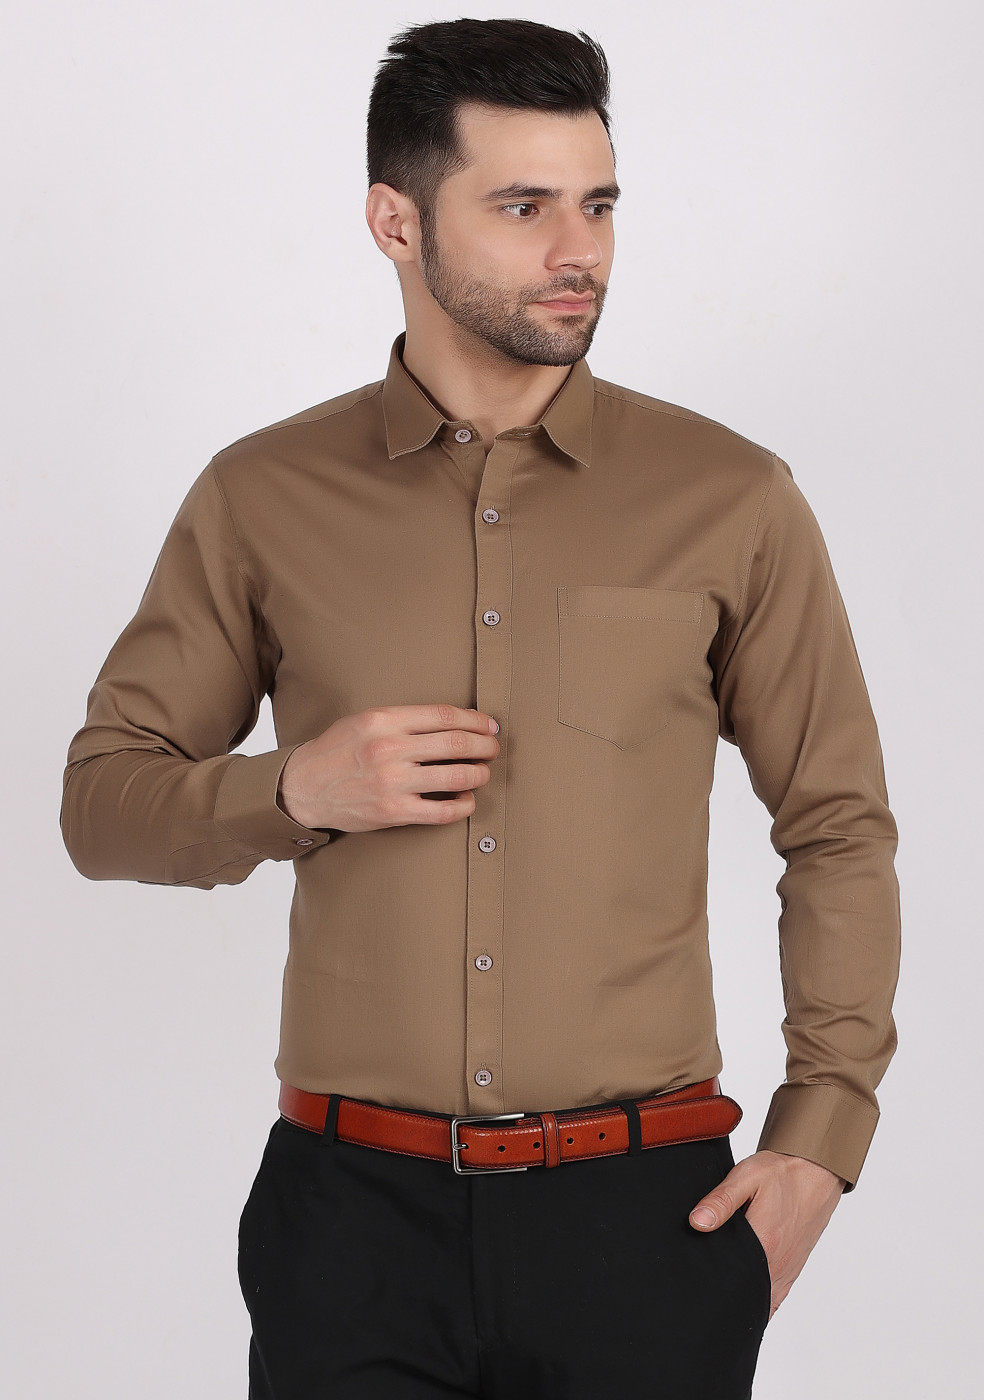 ASHTOM Khaki Plain Cotton Shirt For Men